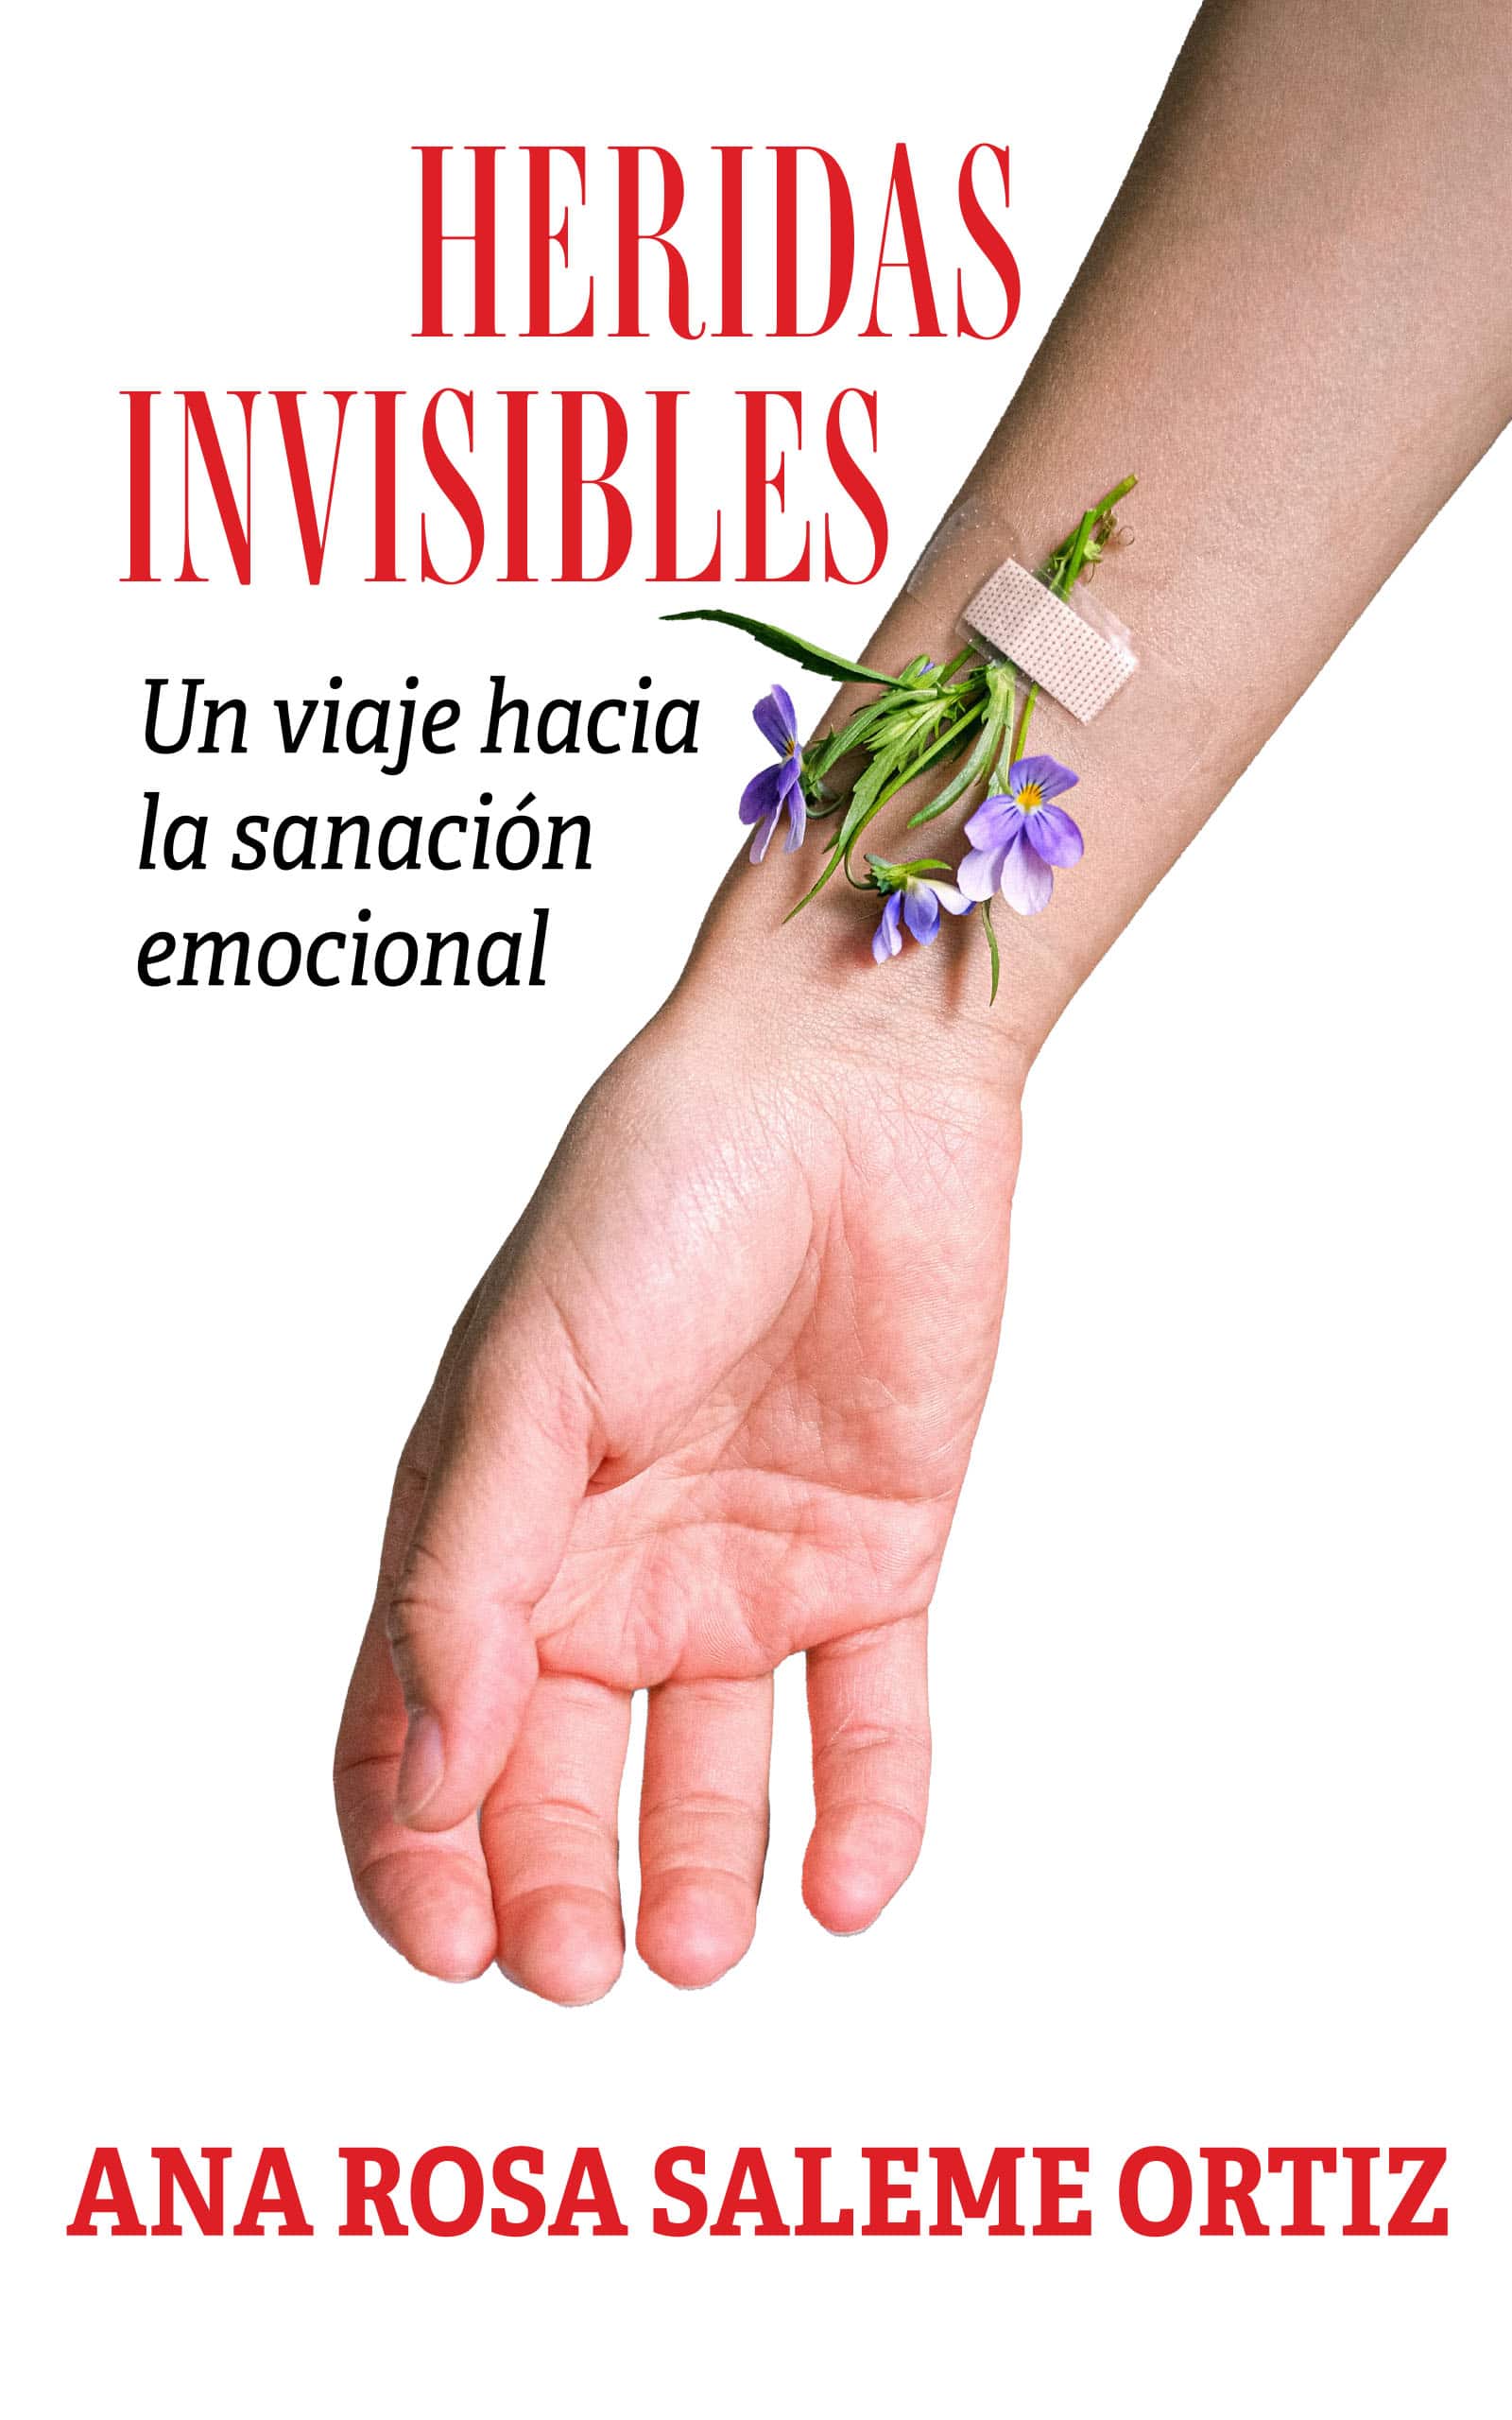 Heridas invisibles, de Ana Rosa Saleme Ortiz